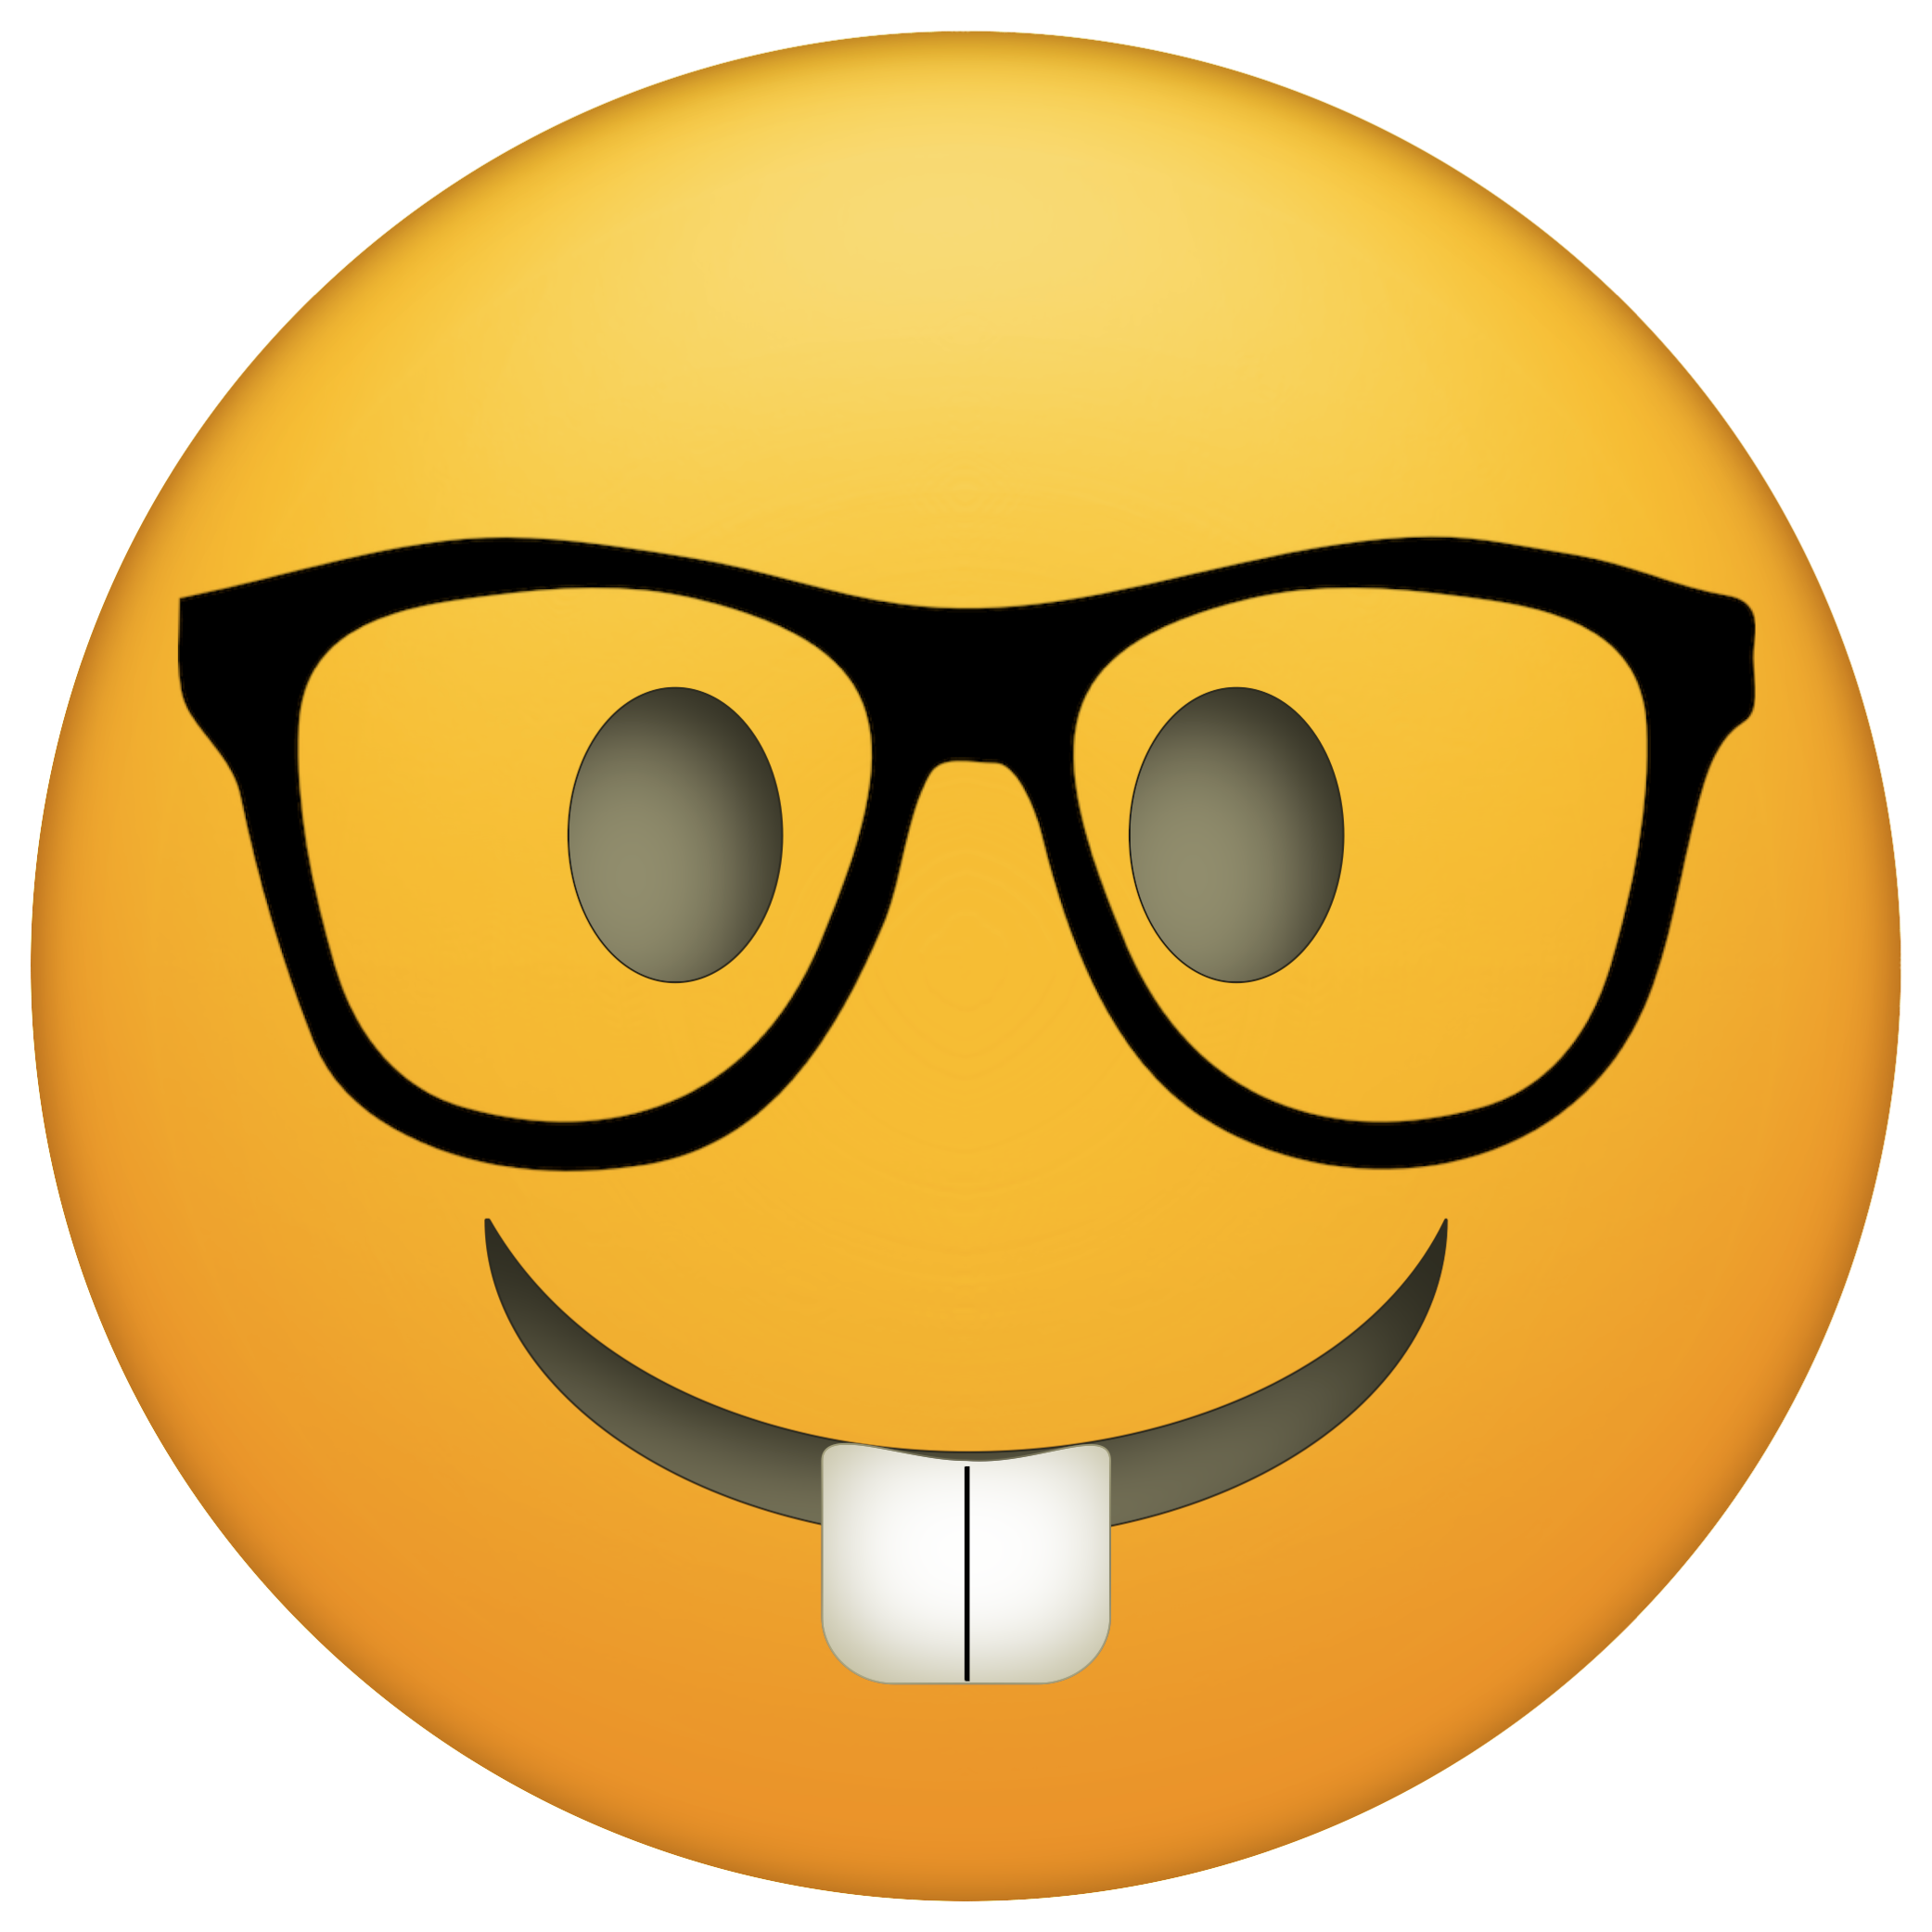 Download PNG image - Sunglasses Emoji PNG Download Image 